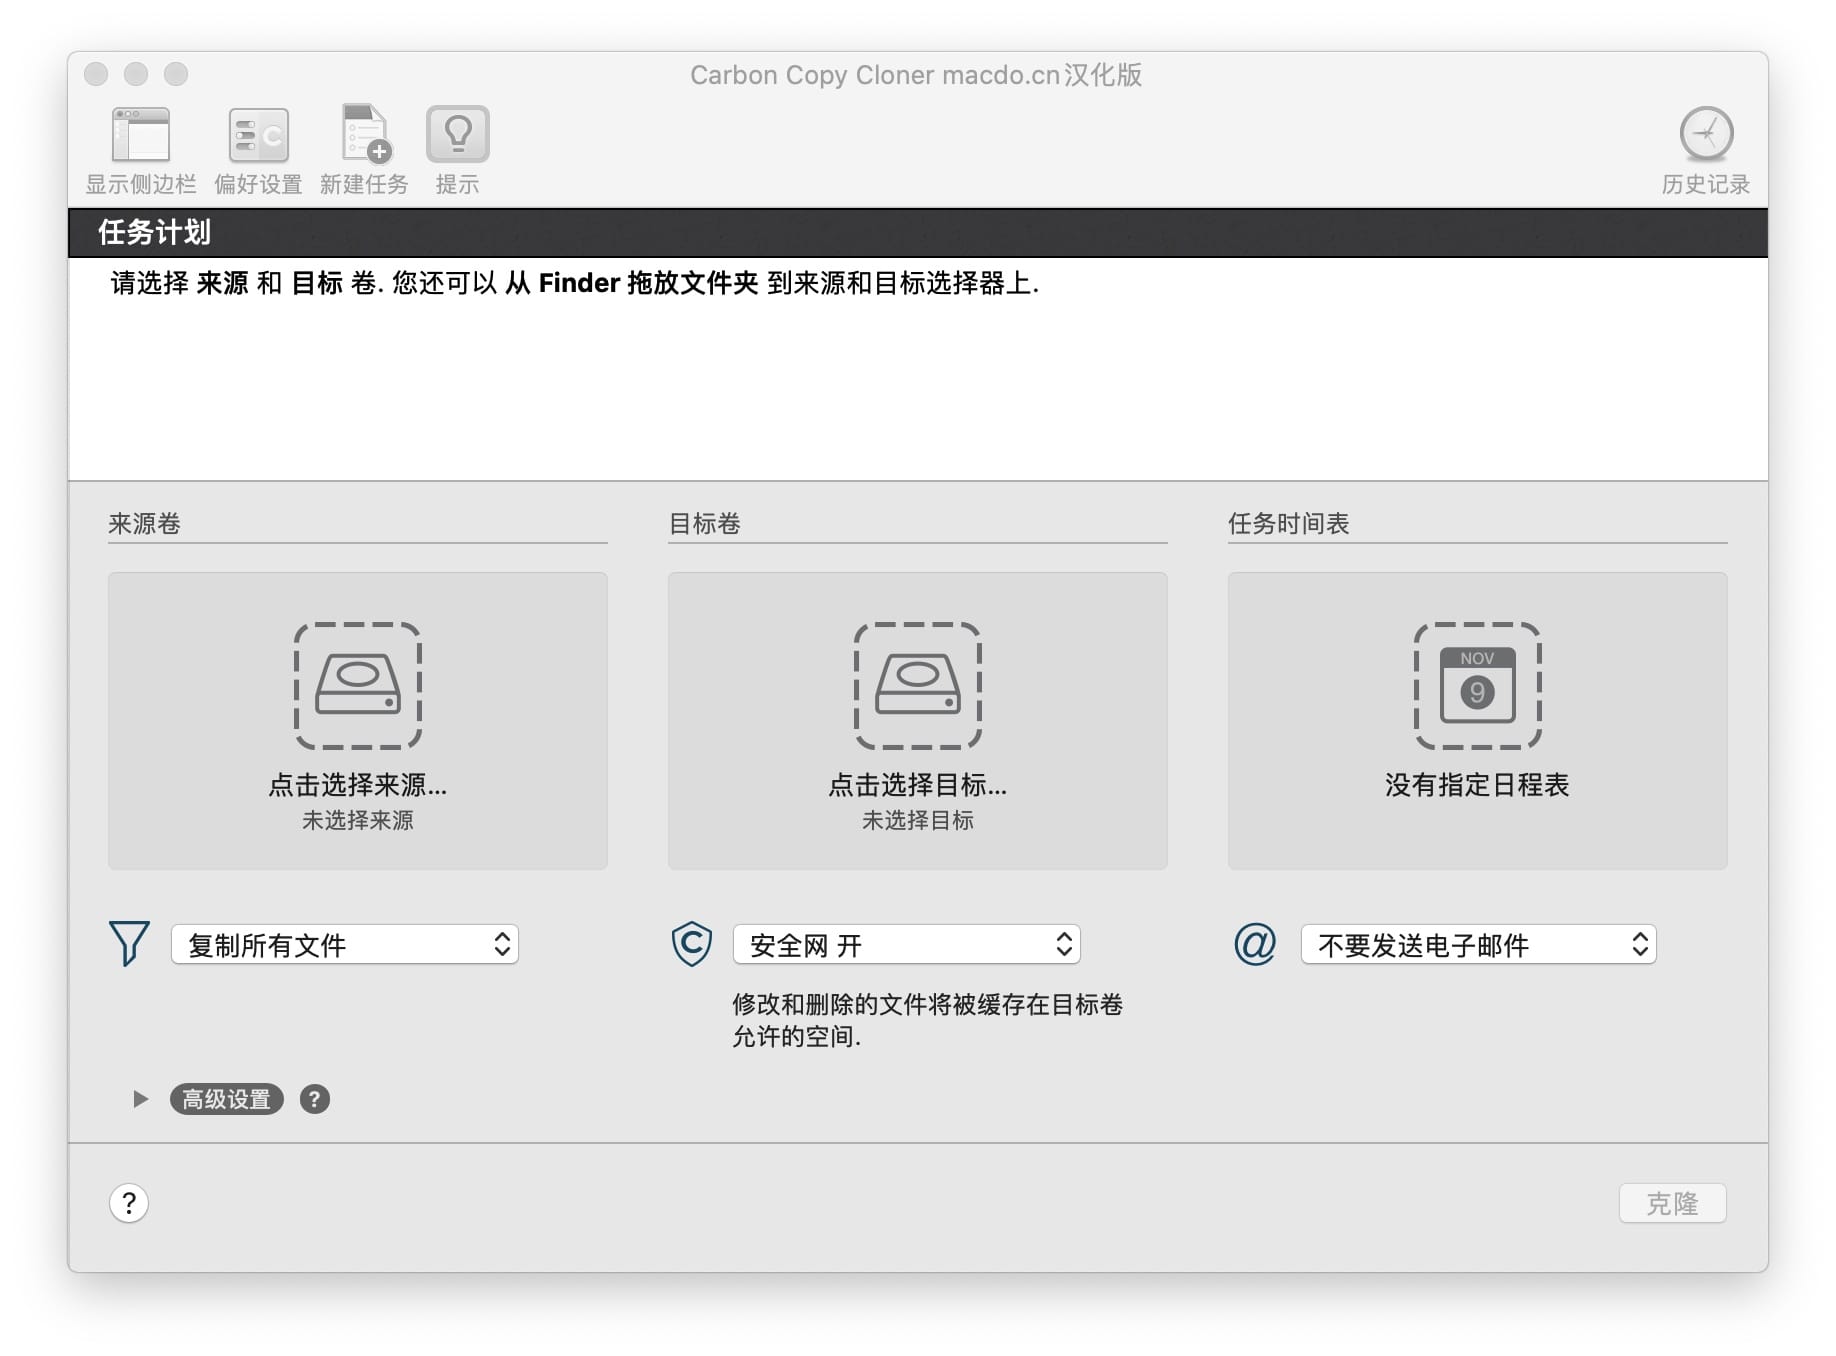 Carbon Copy Cloner 5.1.27 (6193) 中文破解版    硬盘克隆、同步、备份  第1张